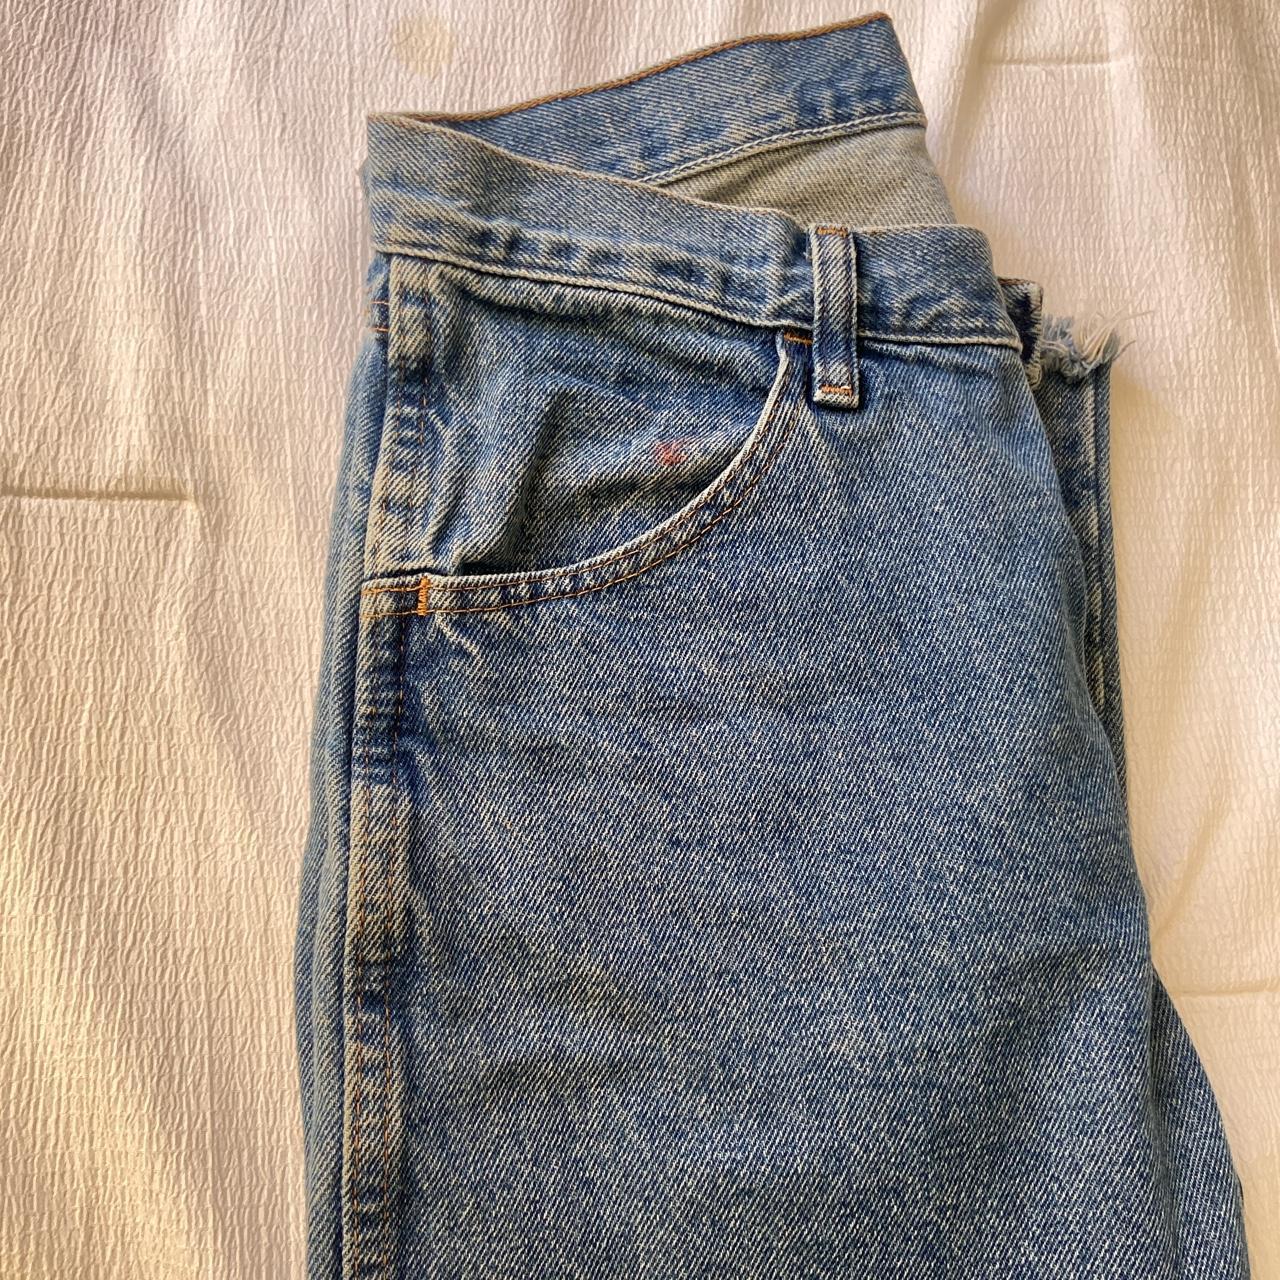 Rustler Denim Jeans Measures 30x30 Has one small... - Depop